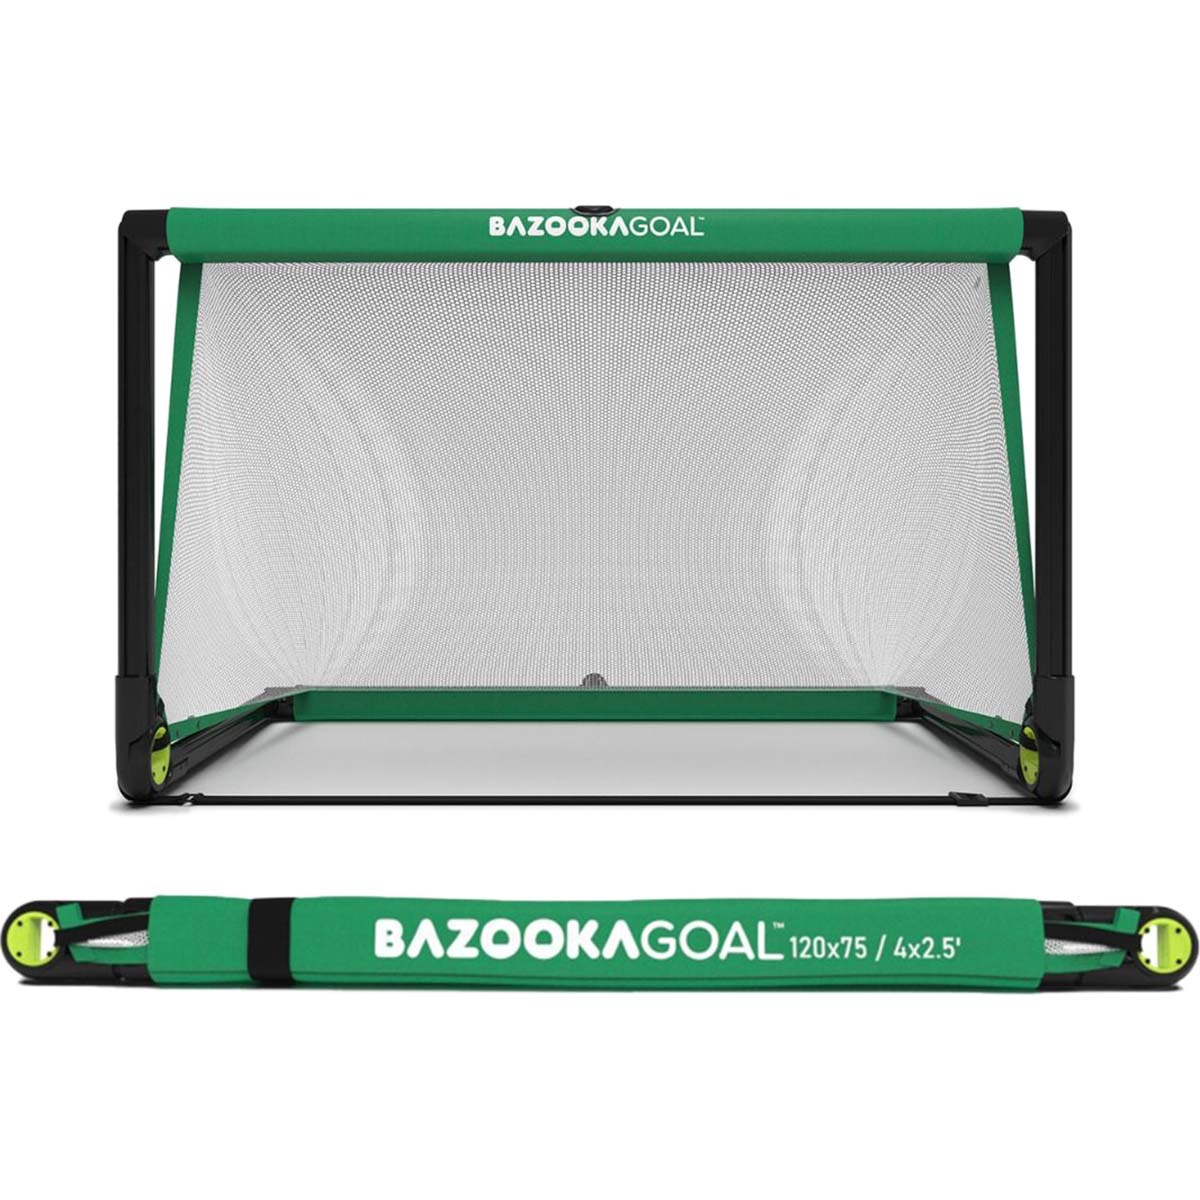 BazookaGoal Original 120x75cm - Black/Green